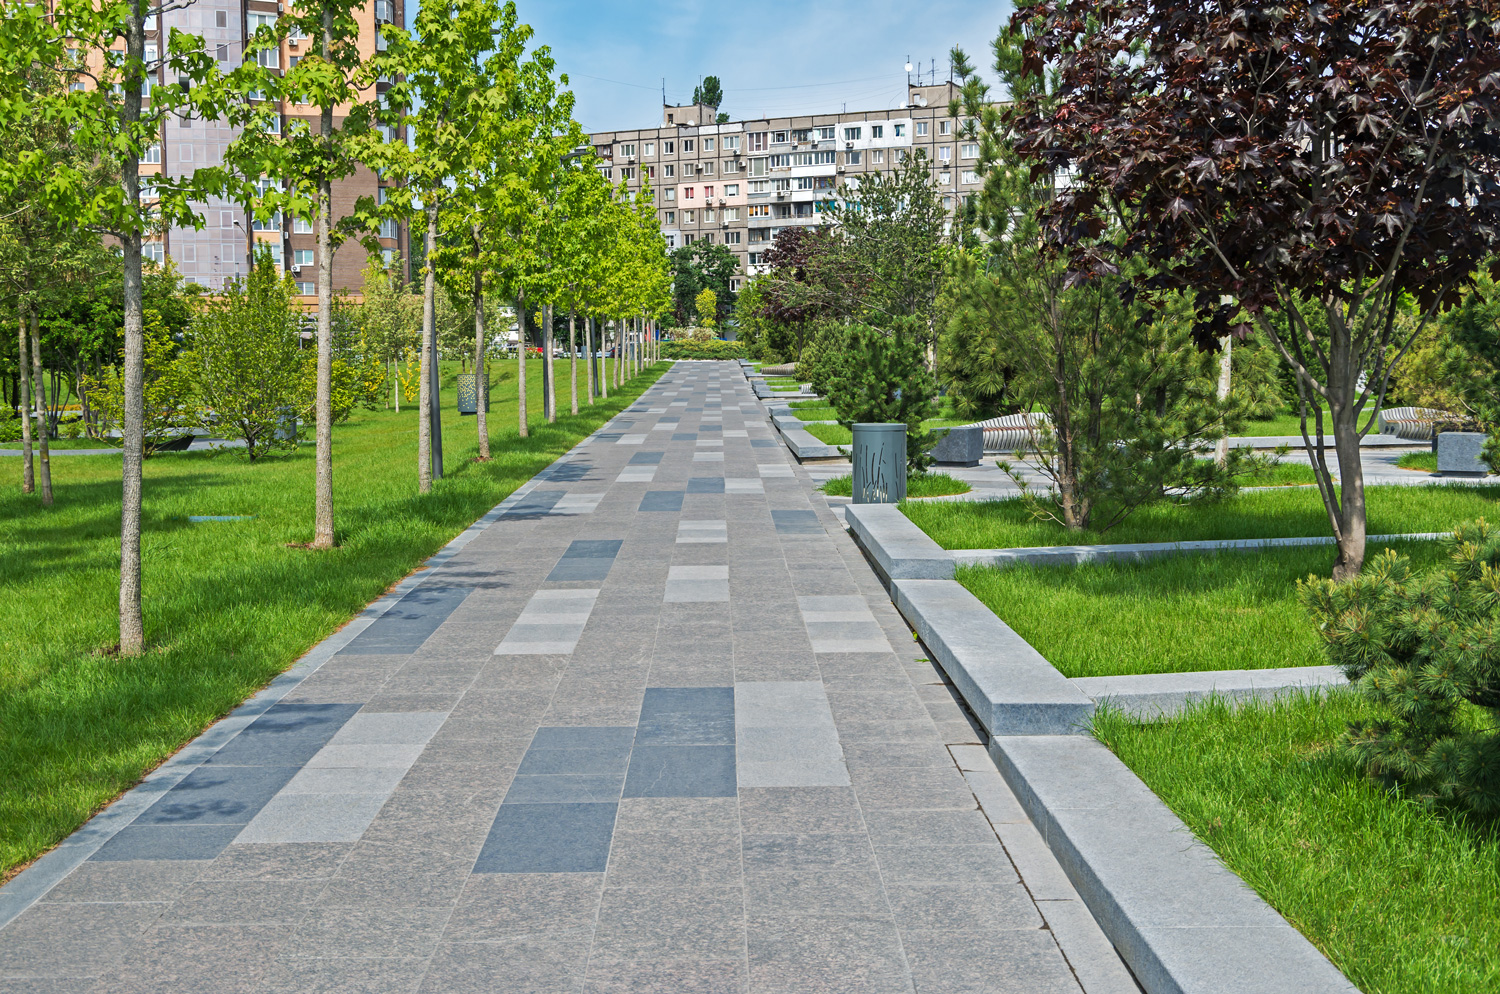 Walking path tiled with granite 